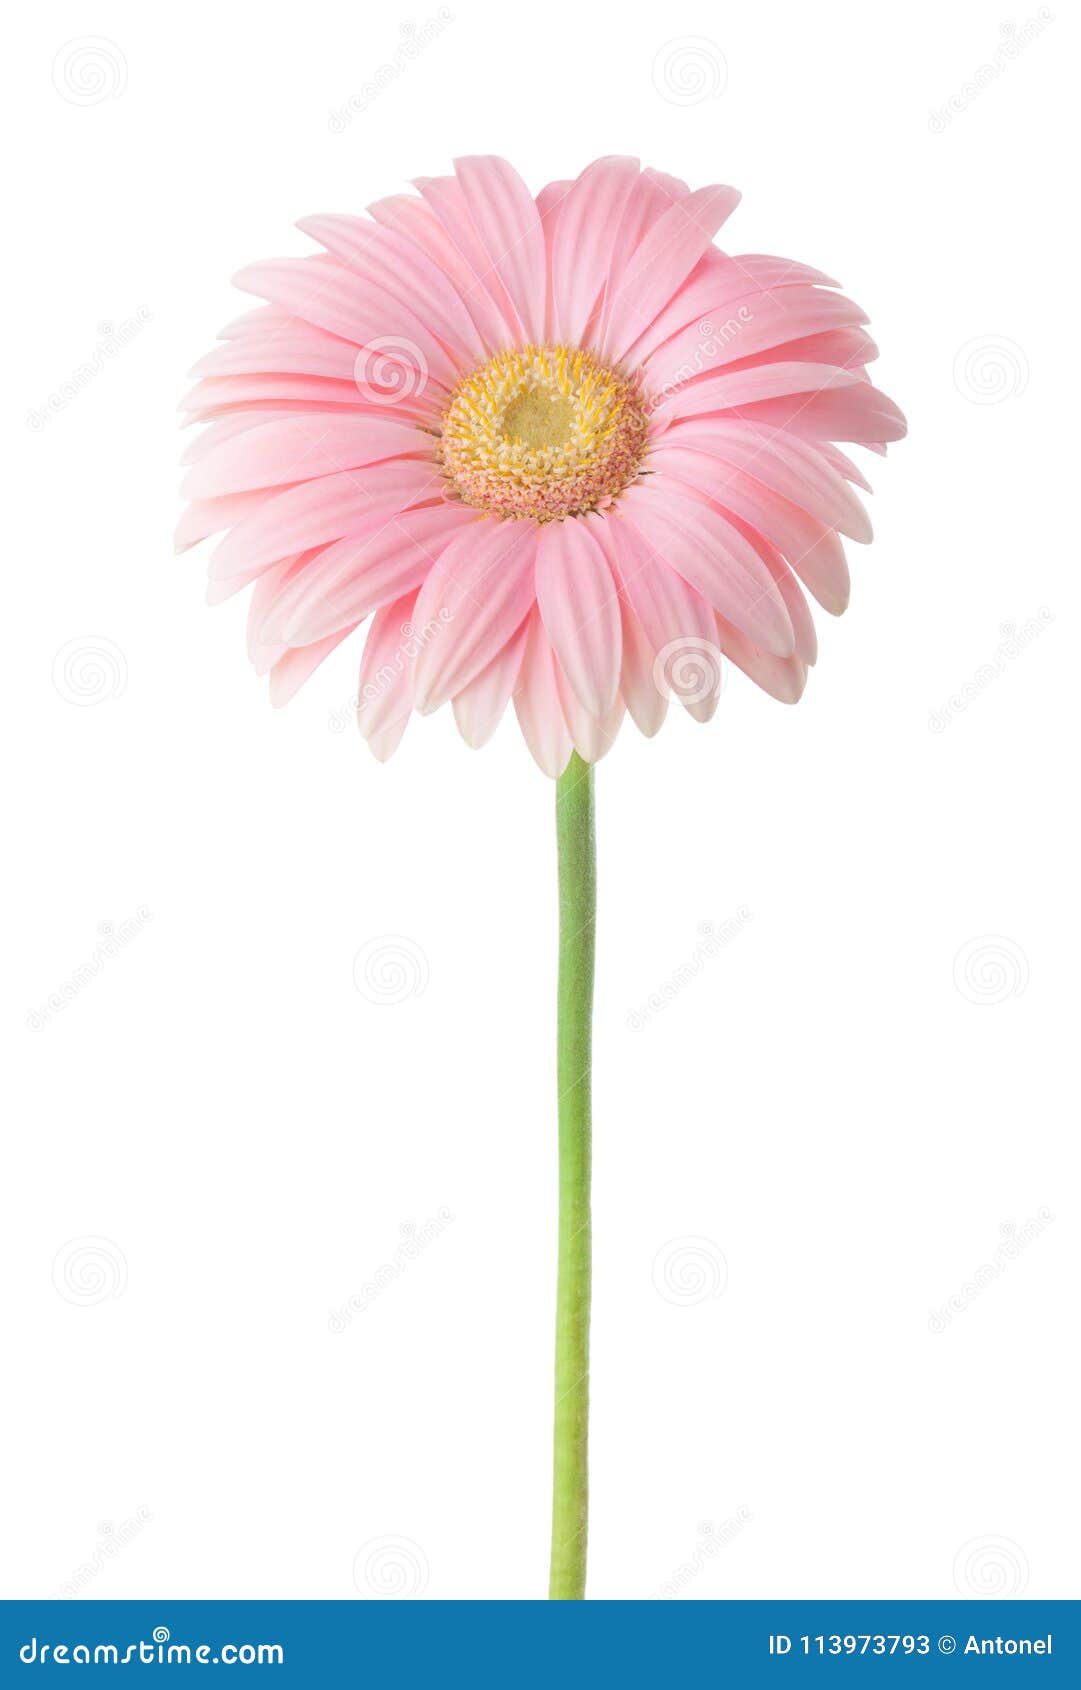 light pink gerbera flower  on white background